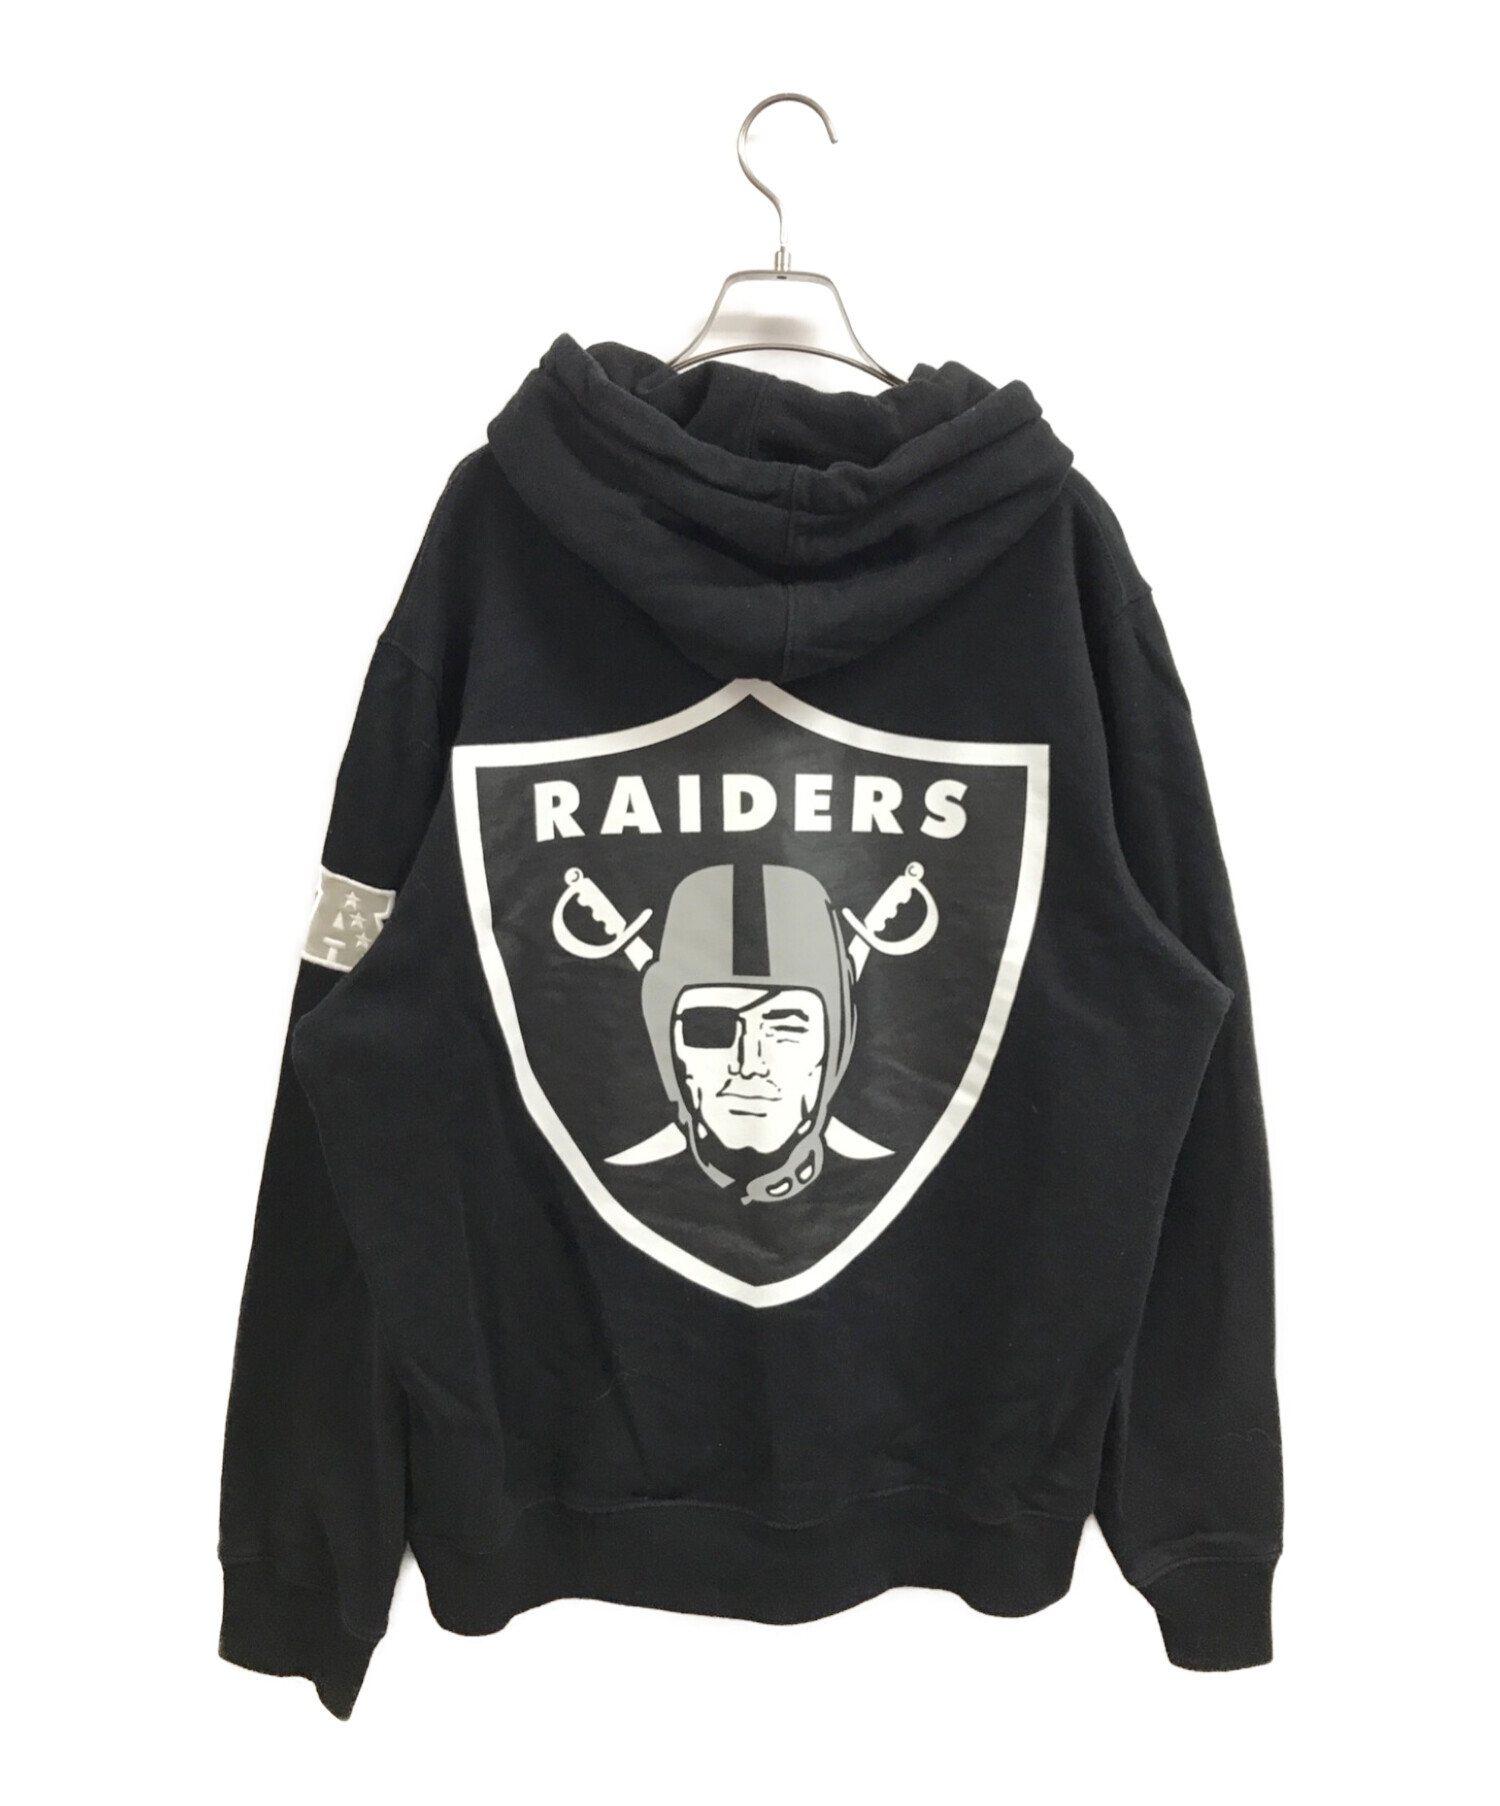 Supreme (シュプリーム) NFL Raiders 47 Hooded Sweatshirt ブラック サイズ:M